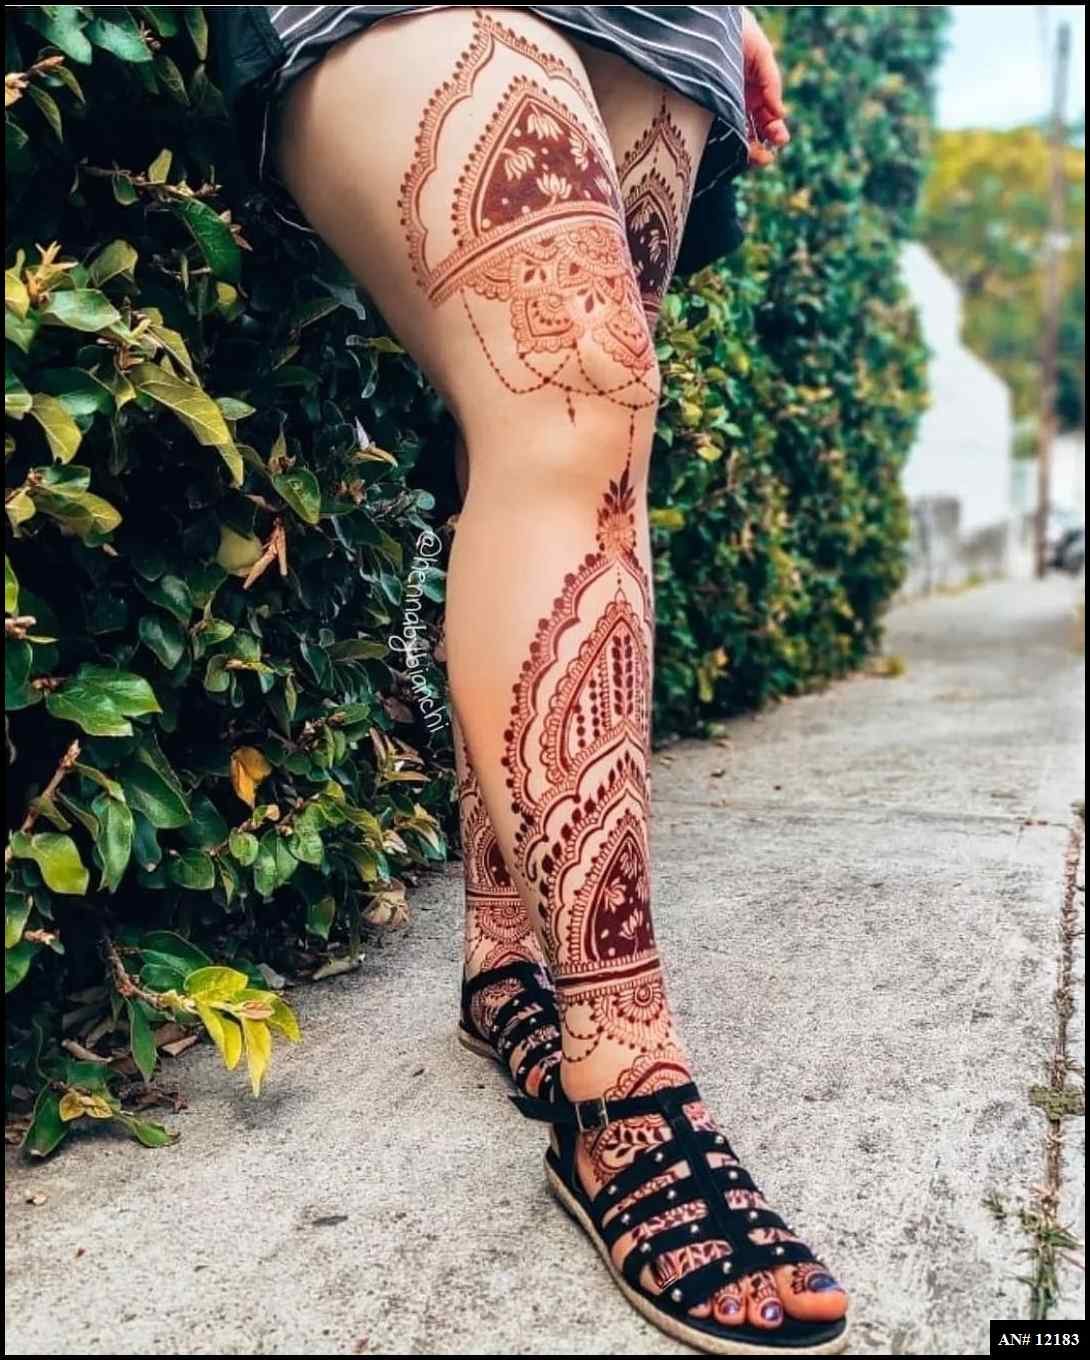 bride-leg-mehndi-design